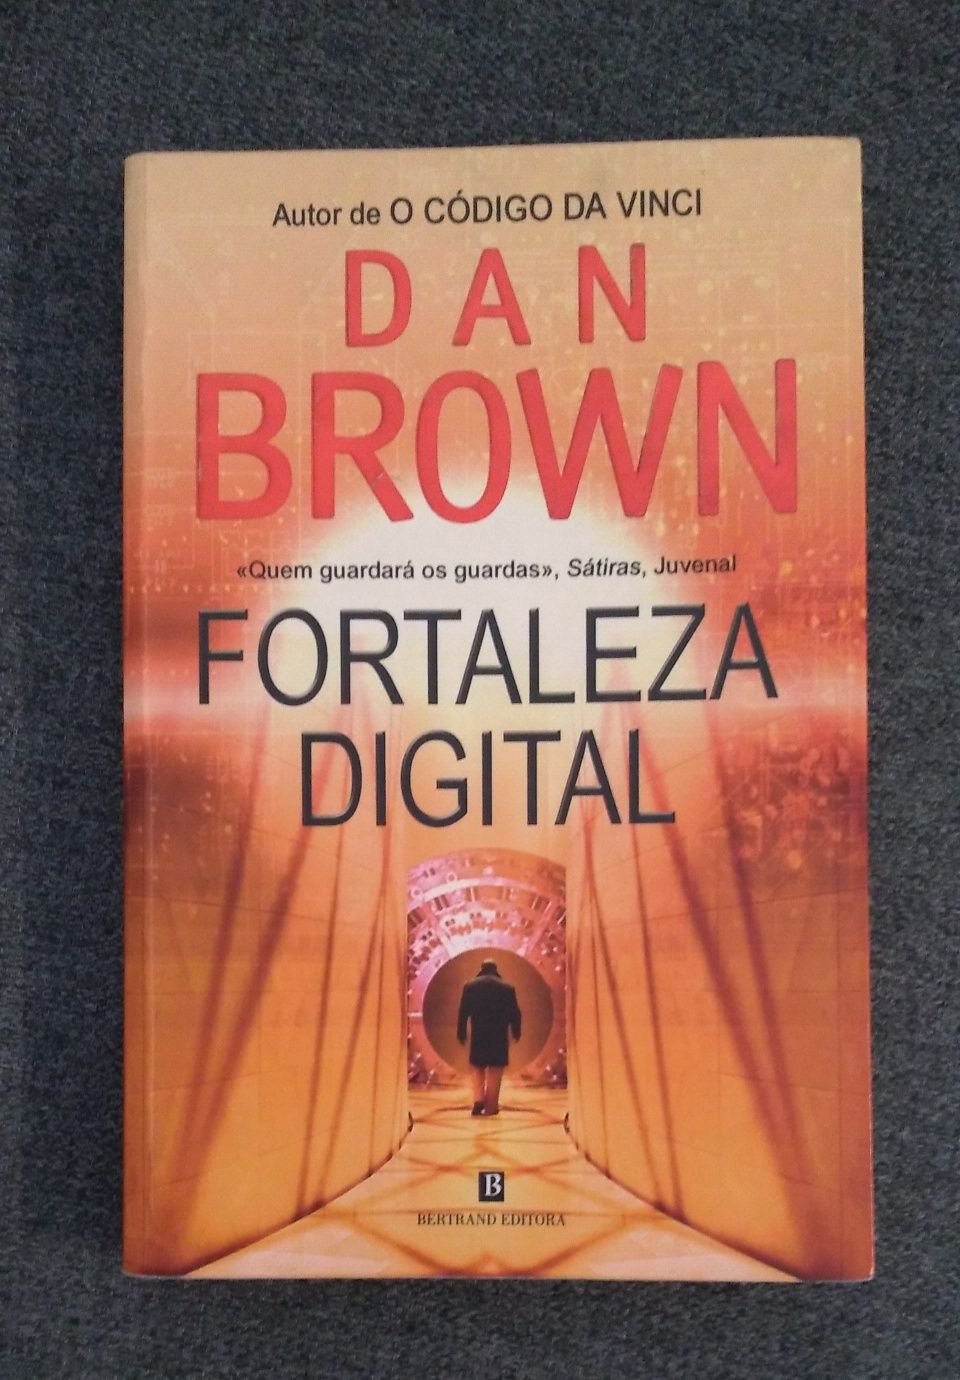 Fortaleza Digital - Dan Brown, livro do mesmo autor de Código DaVinci